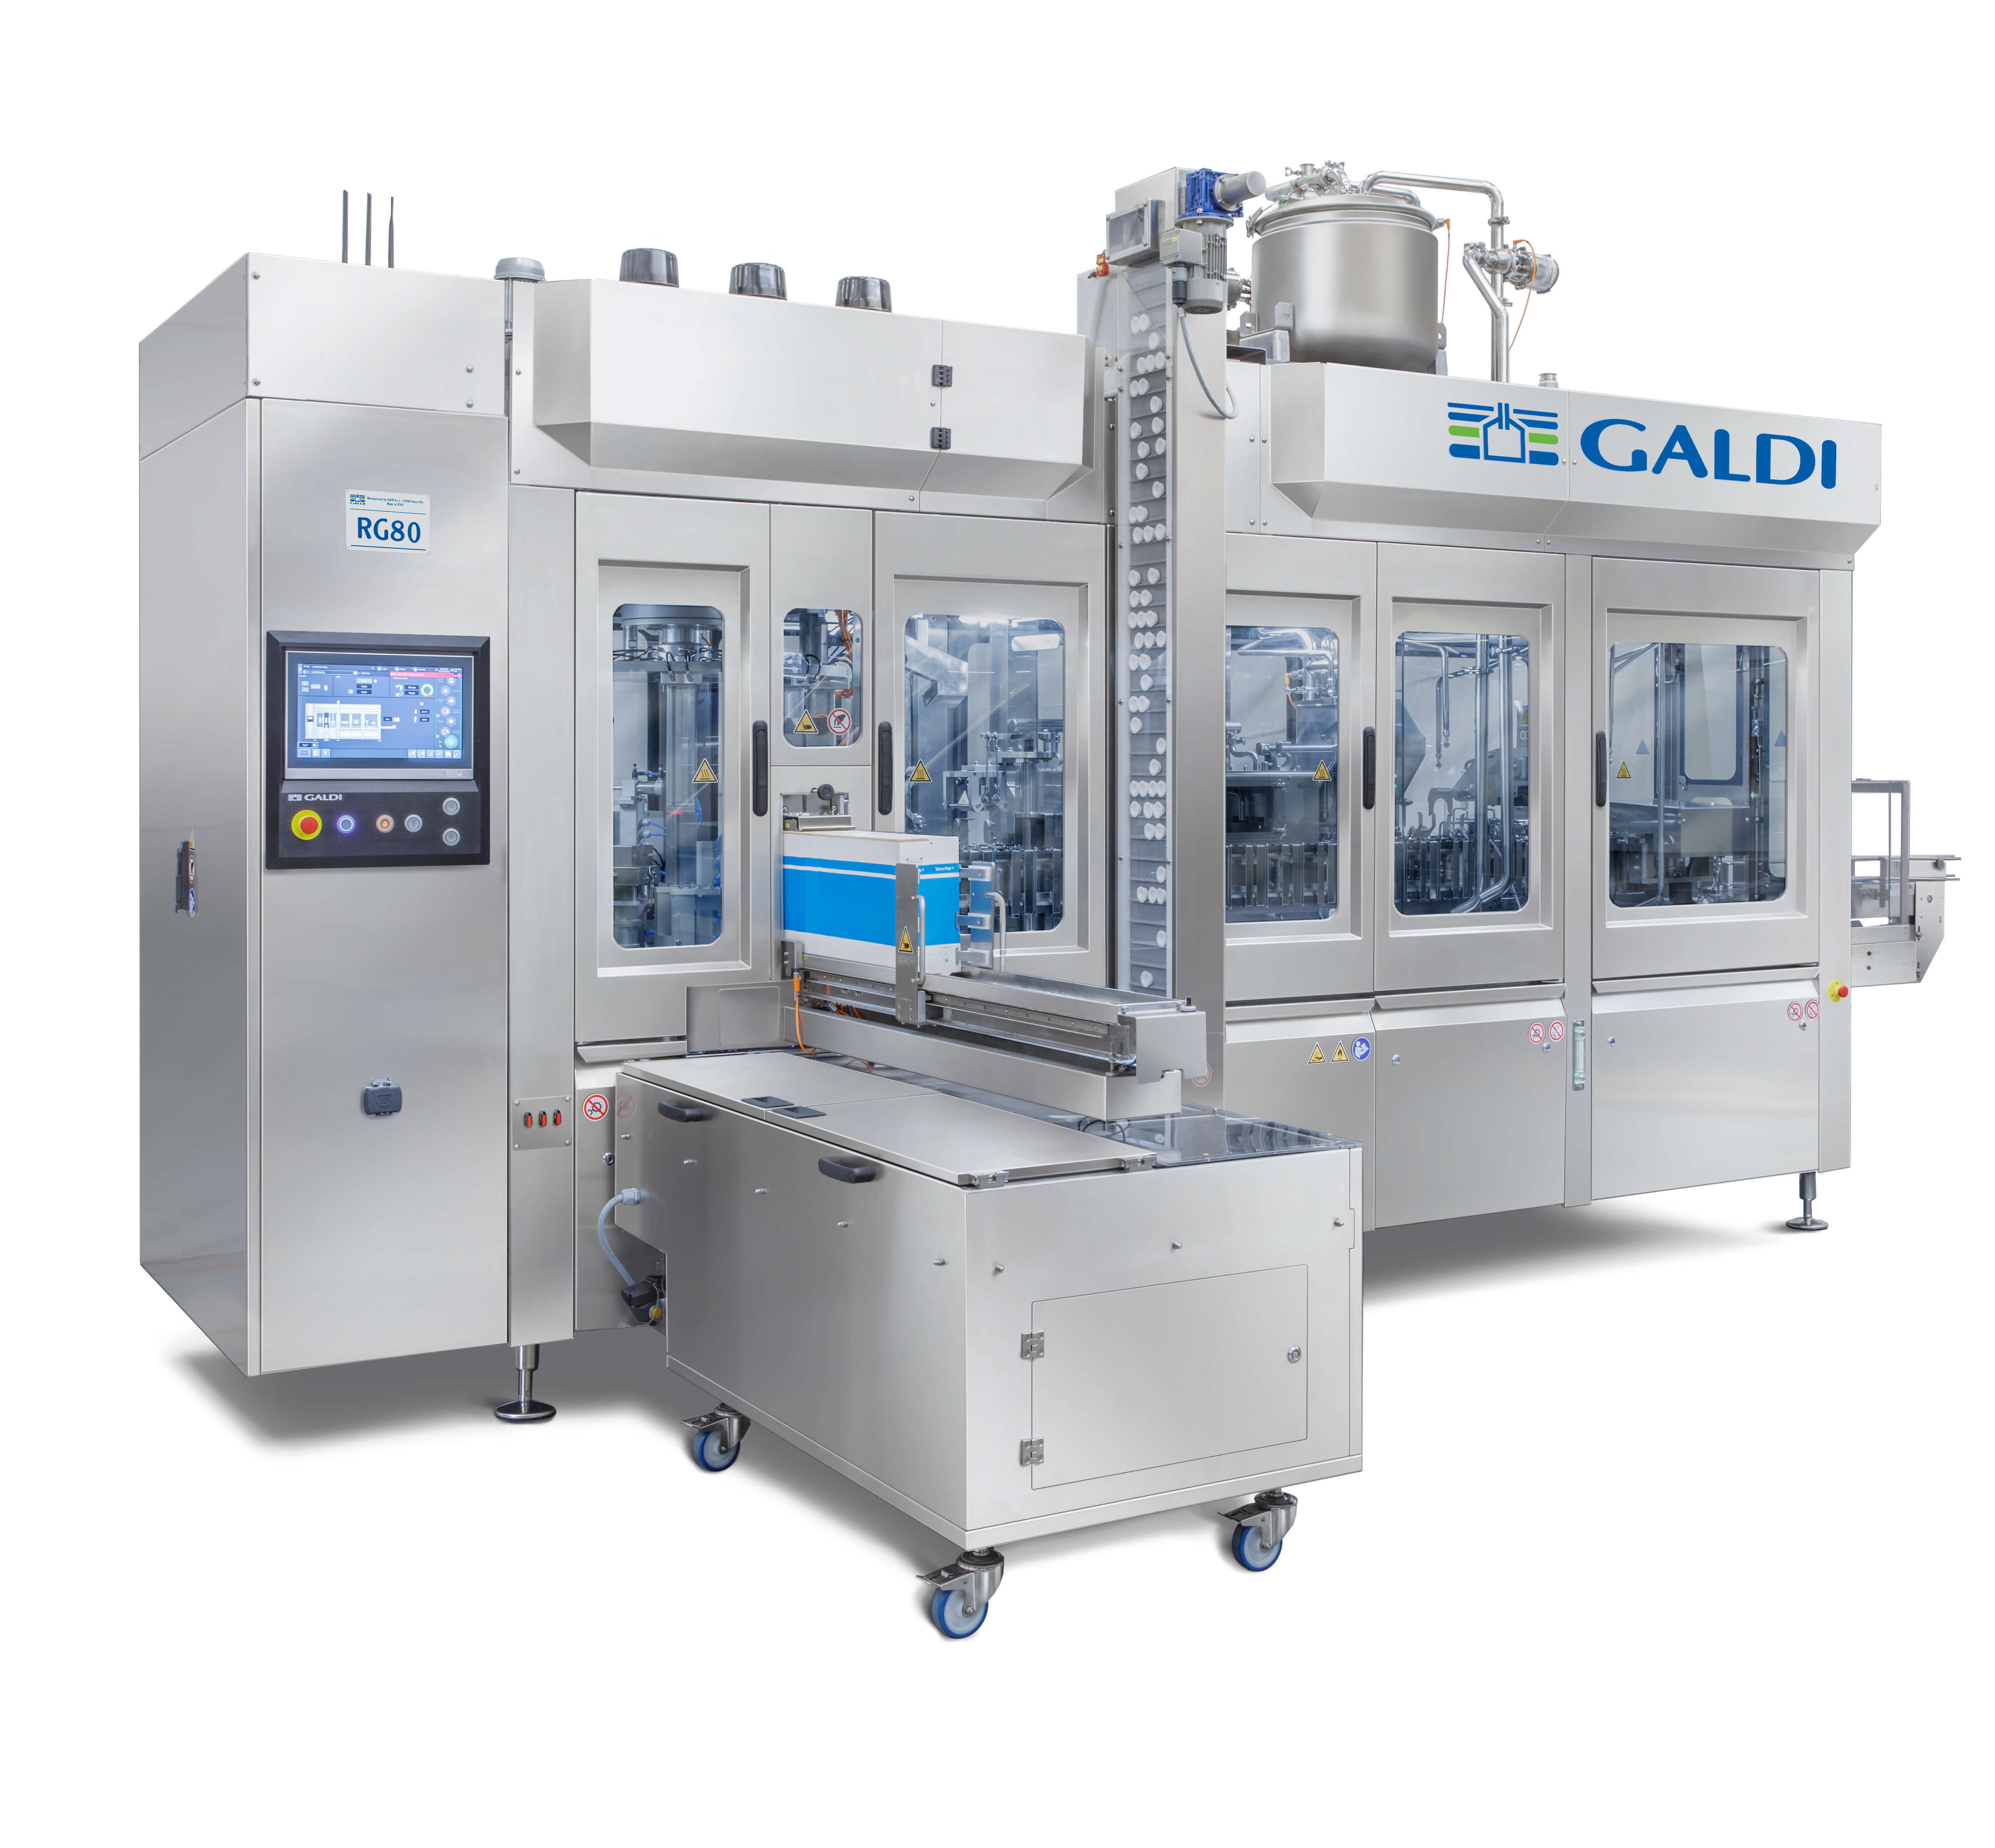 Galdi Machine series RG80